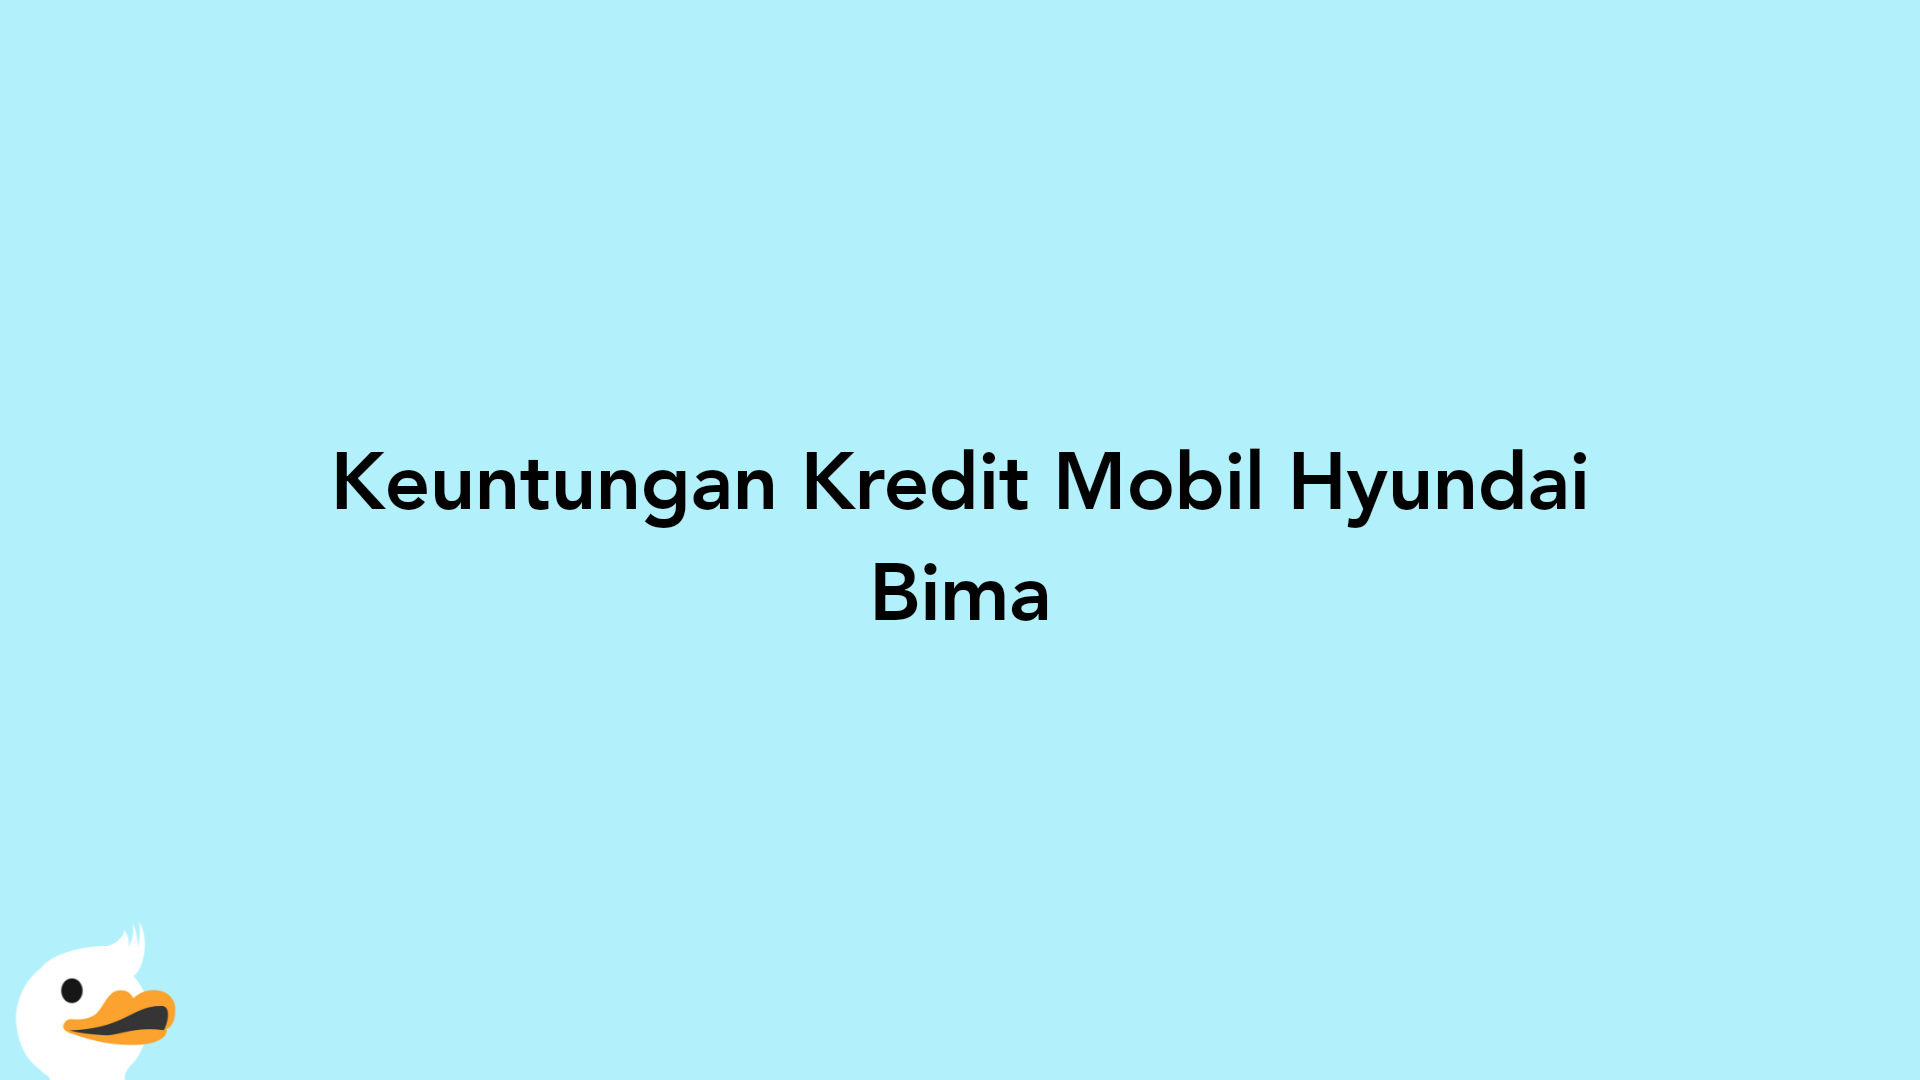 Keuntungan Kredit Mobil Hyundai Bima